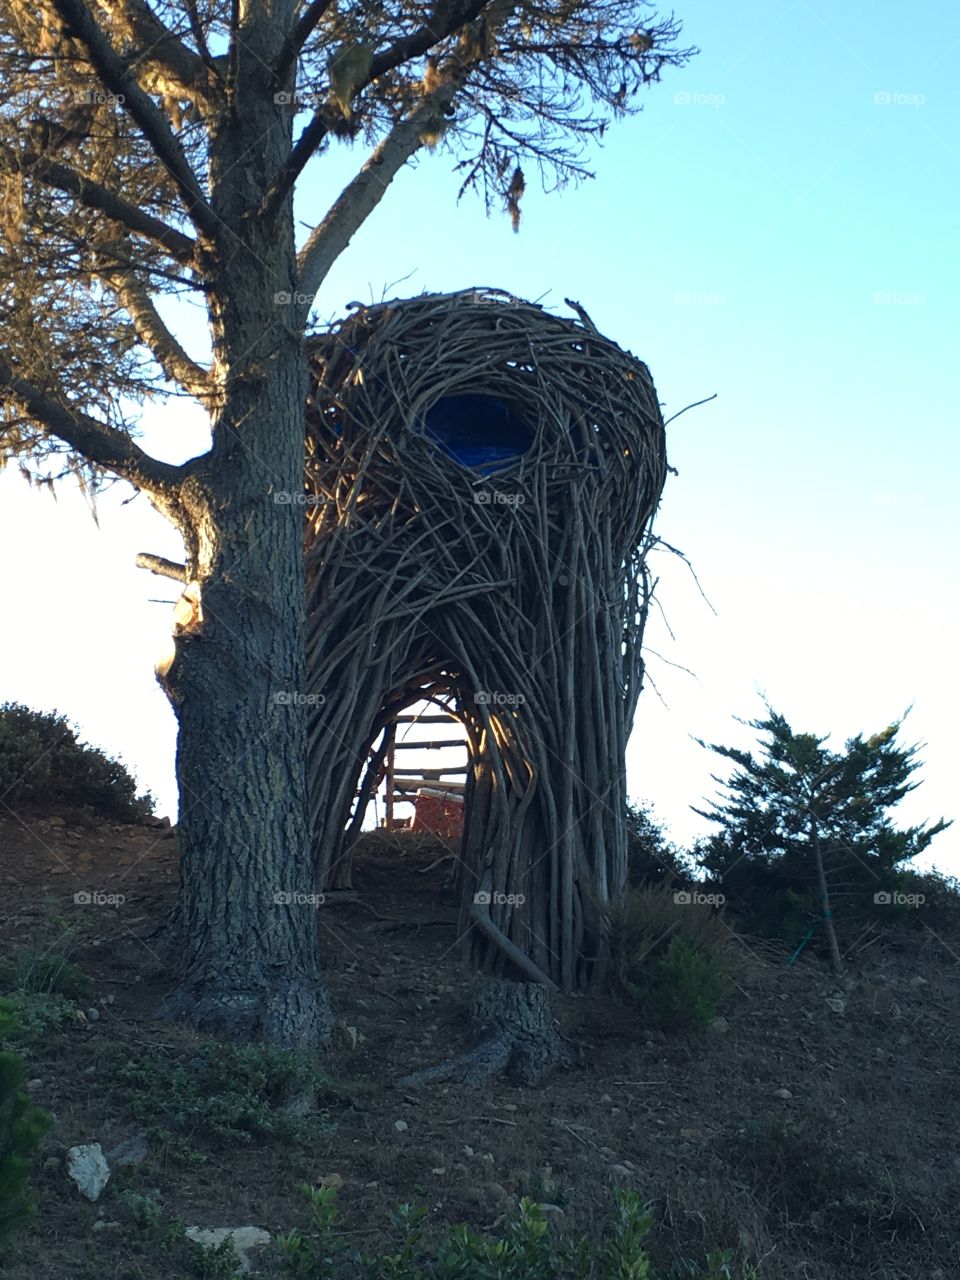 Human nest